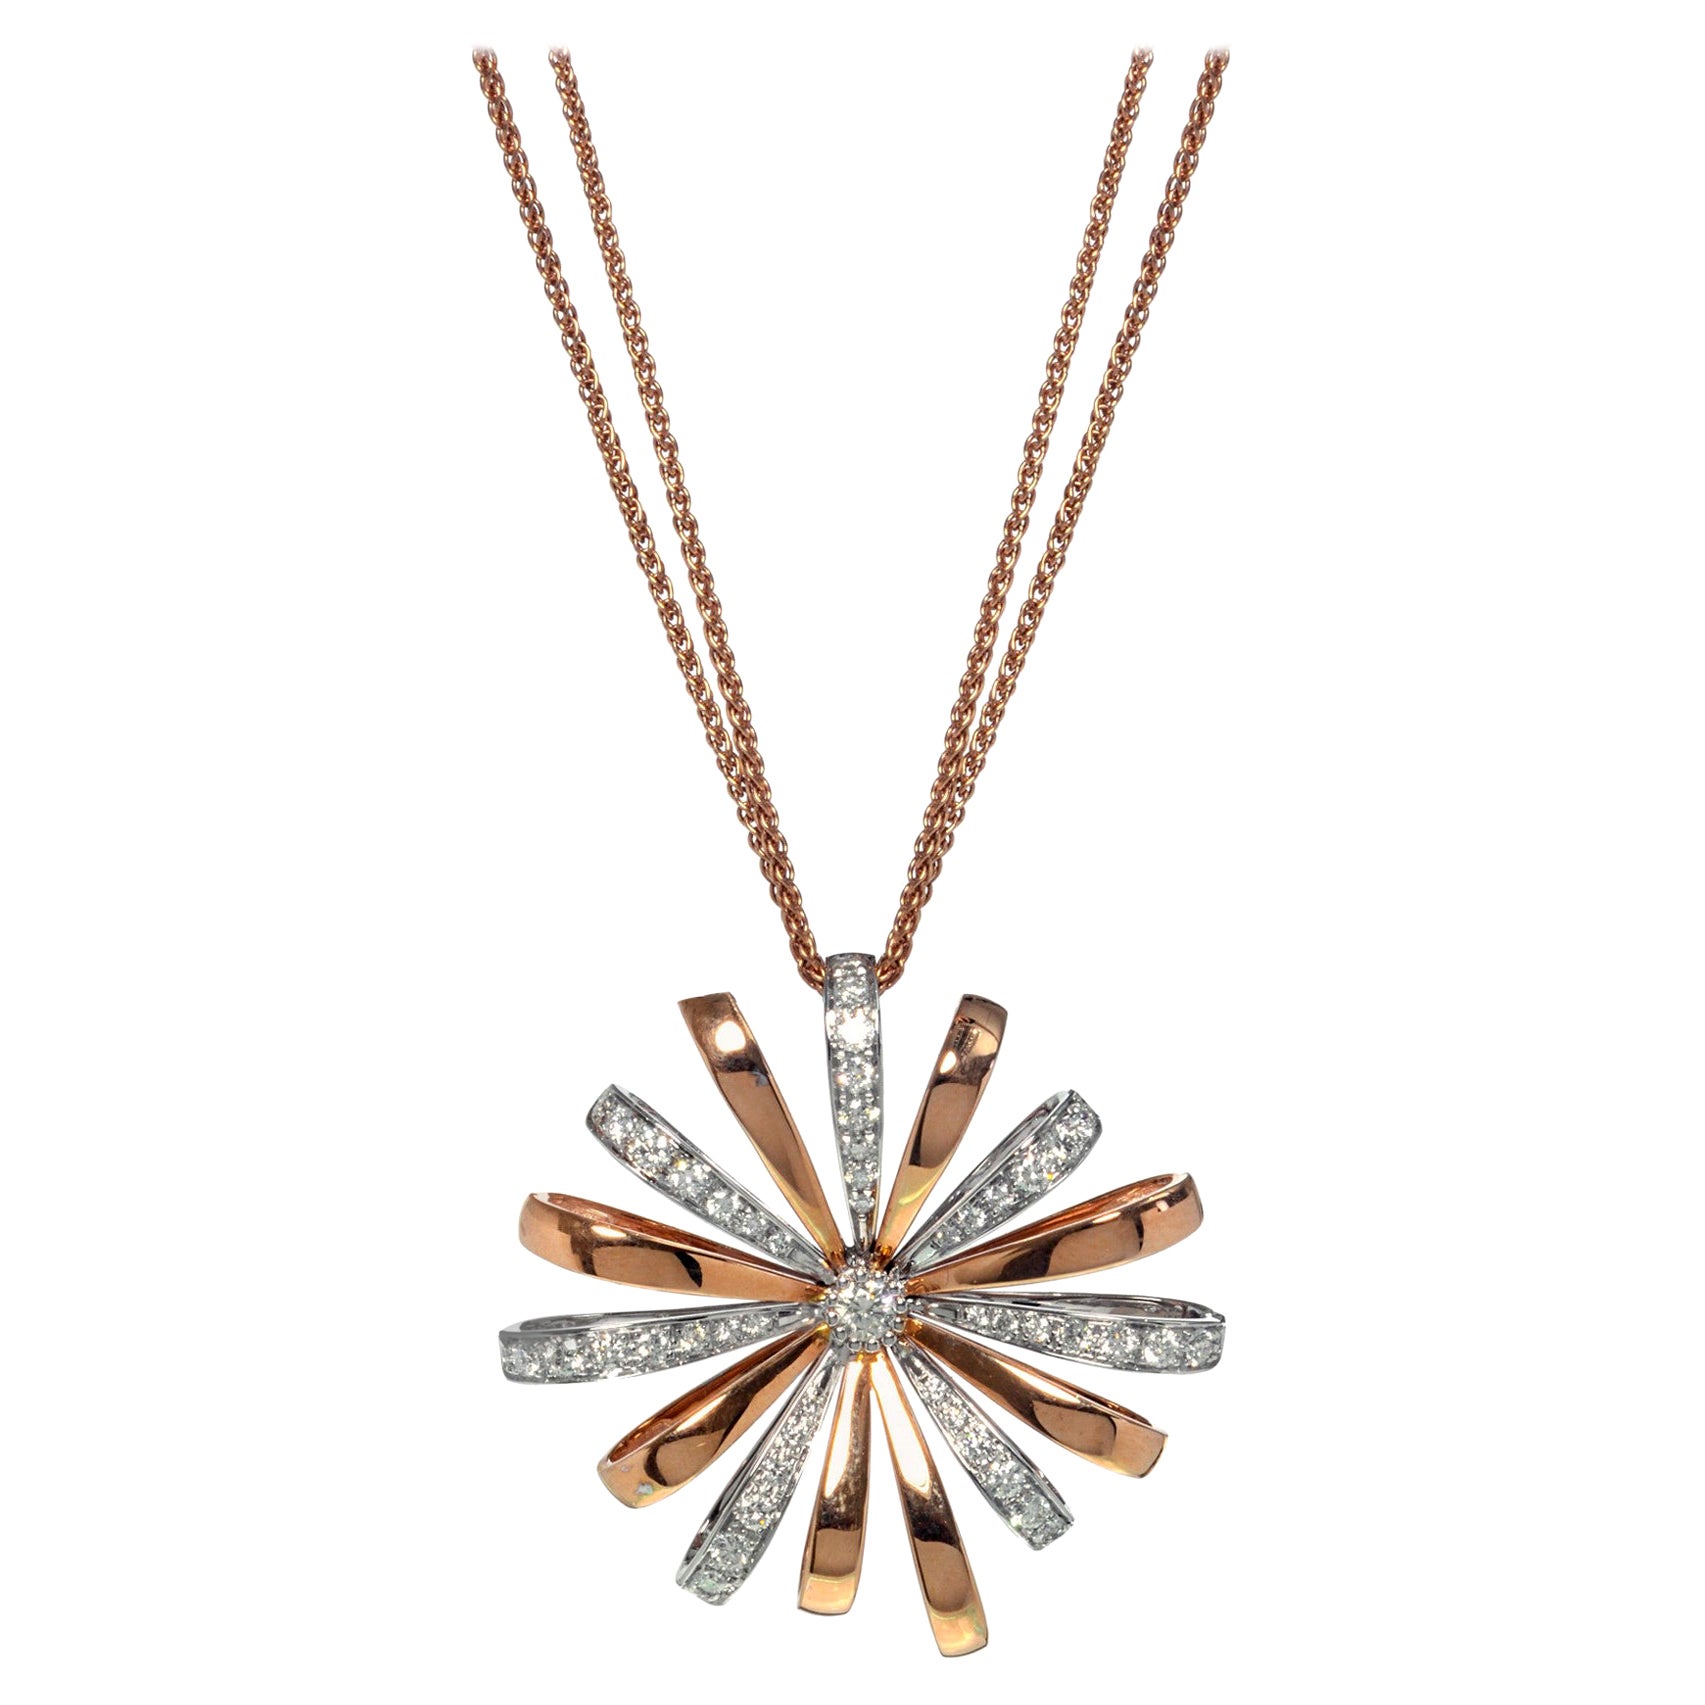 Luca Carati Diamond Pendant Long Necklace 18K Rose & White Gold 1.28Cttw